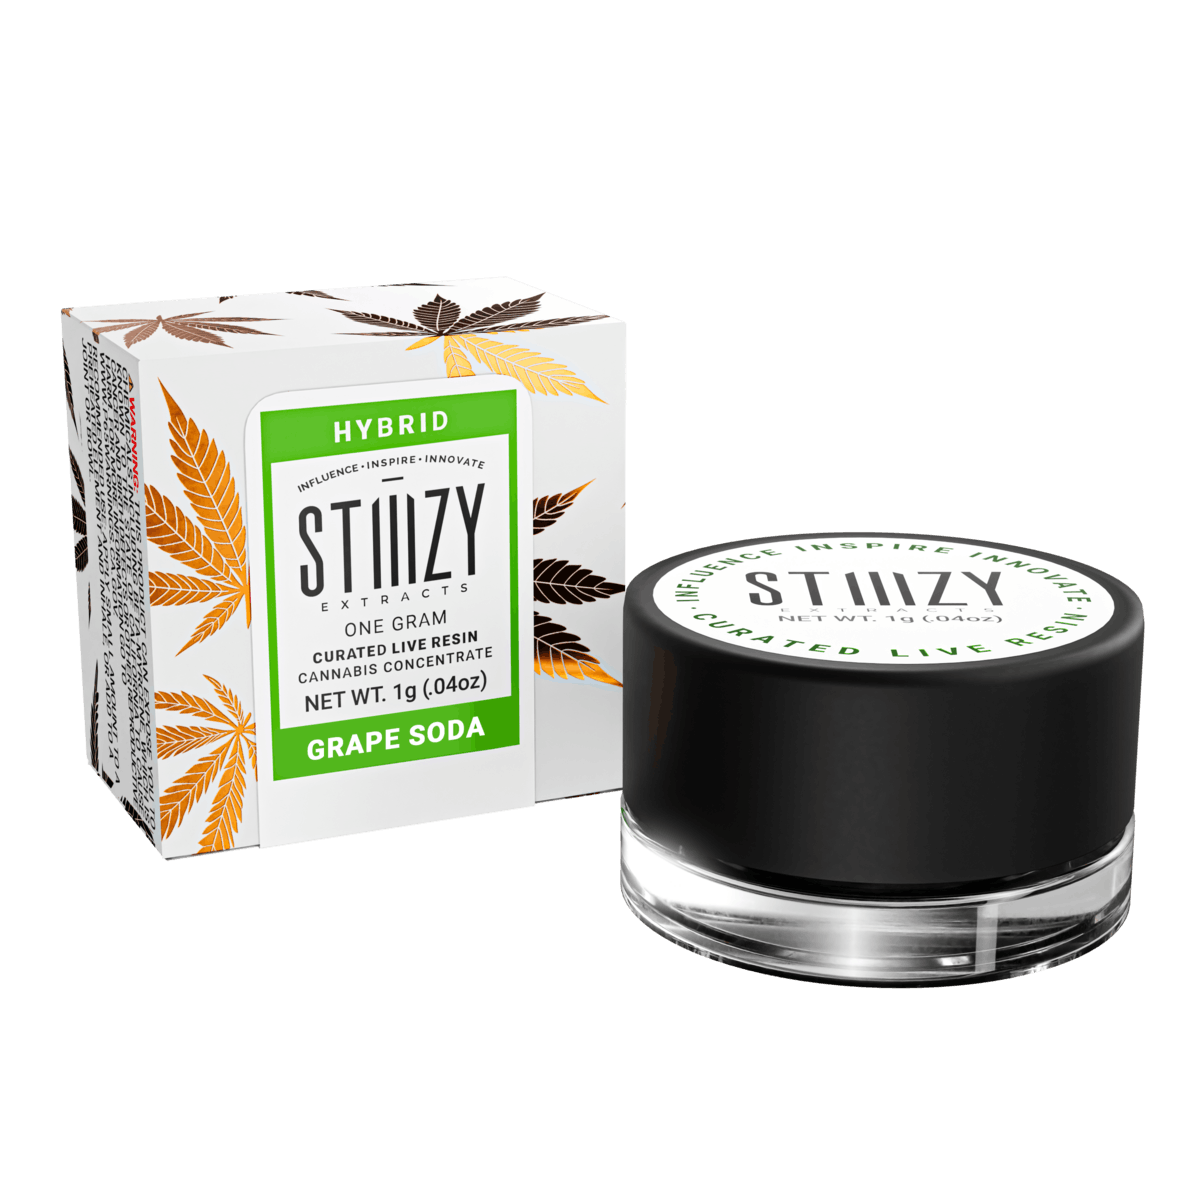 STIIIZY (Curated Live Resin) - 1G Grape Soda